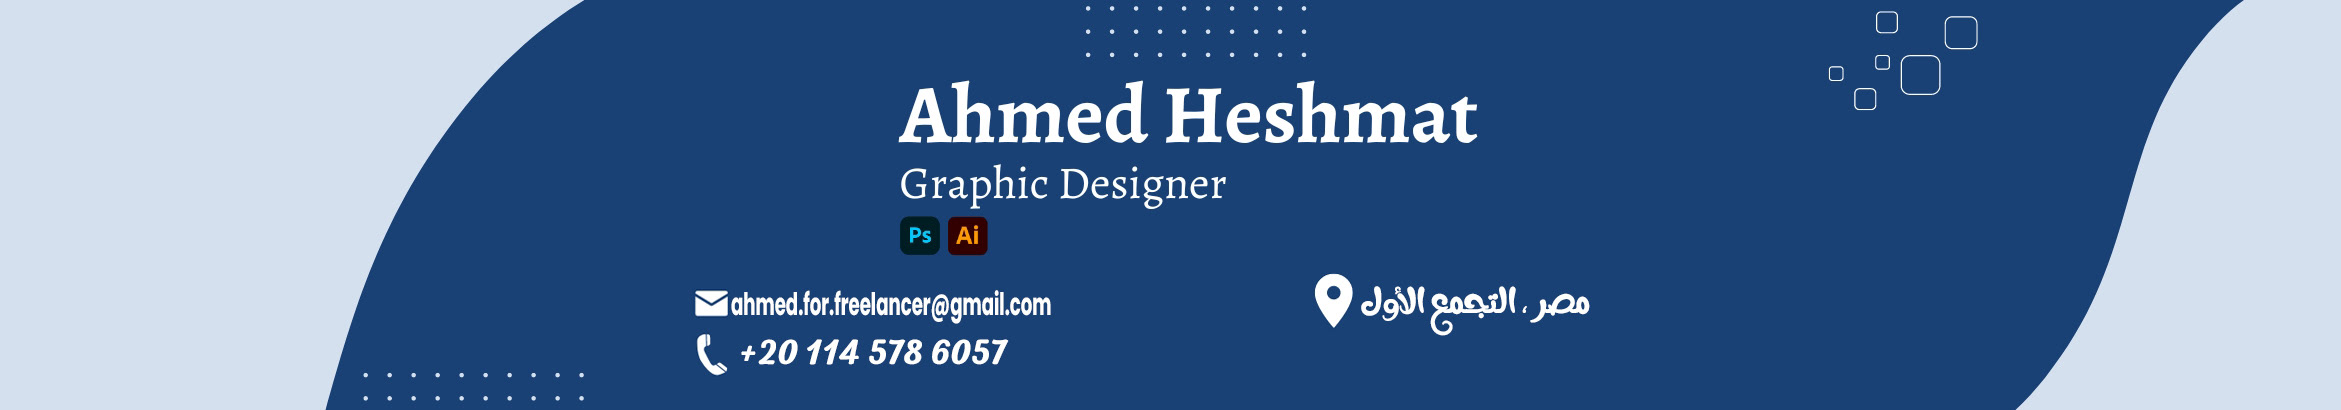 Ahmed Heshmat's profile banner